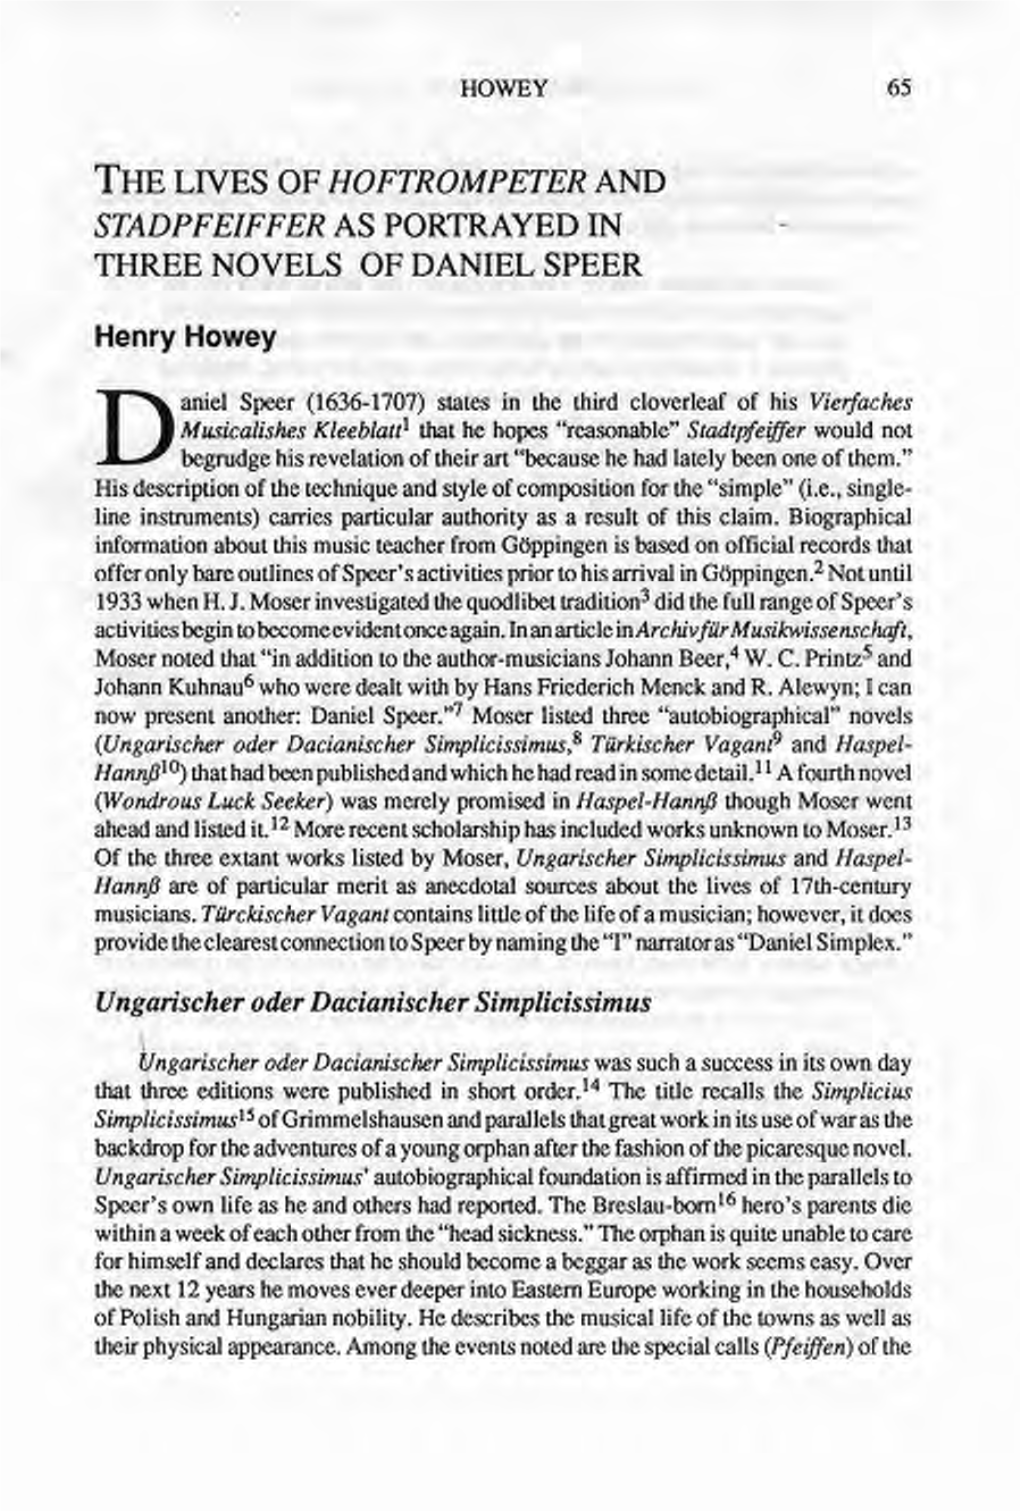 Thelnes of Hoftrompeter and Stadpfeifferas Portrayed in Three Novels of Daniel Speer